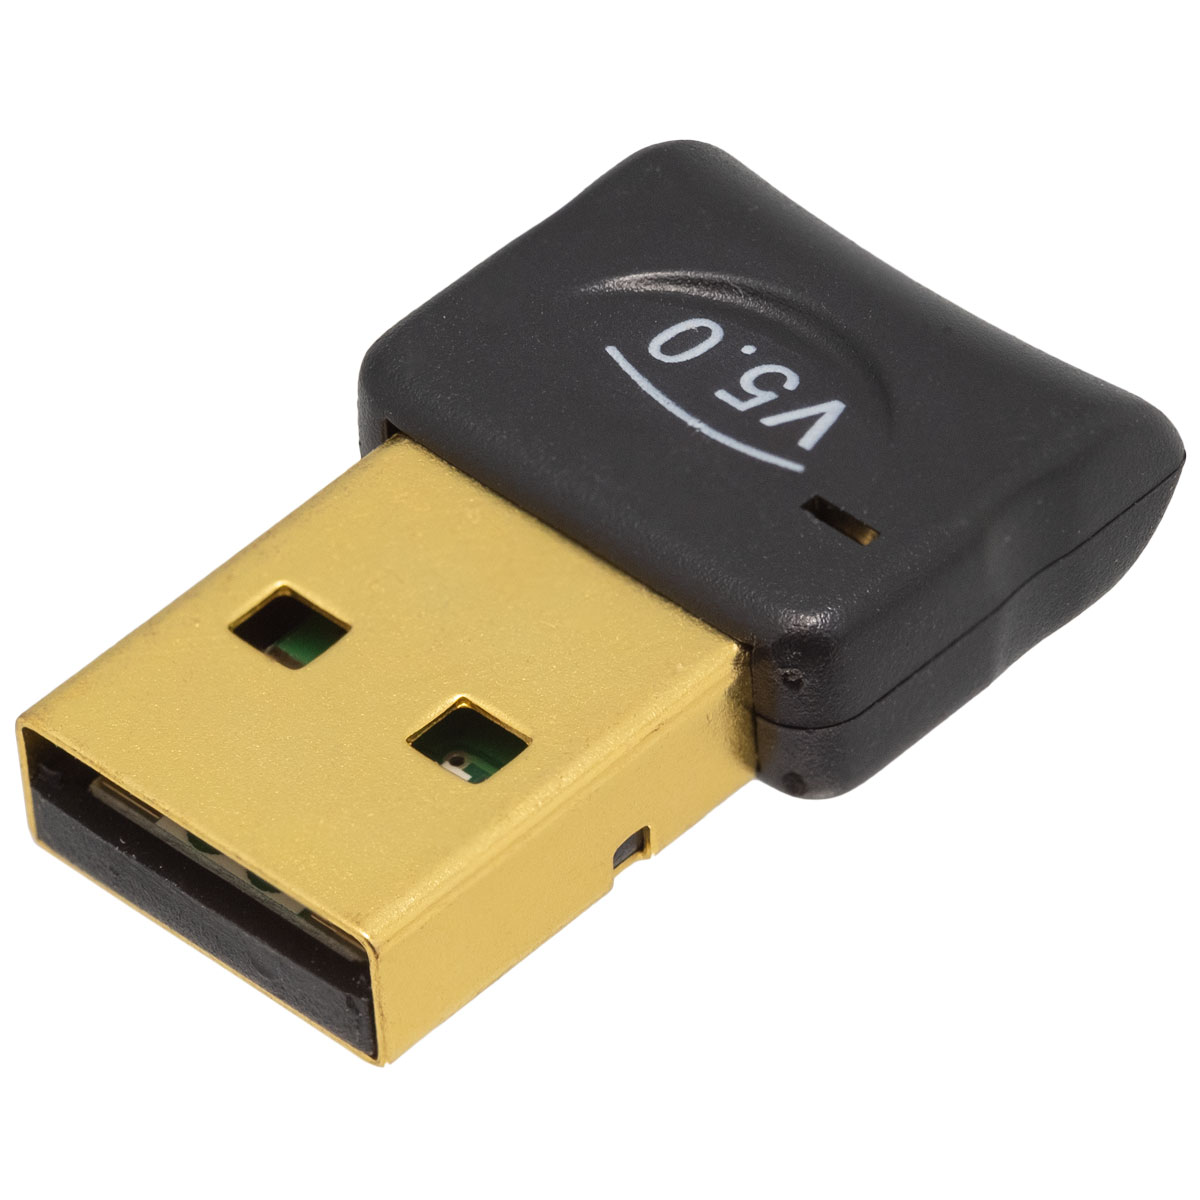 Bluetooth 5.0 USB dongle